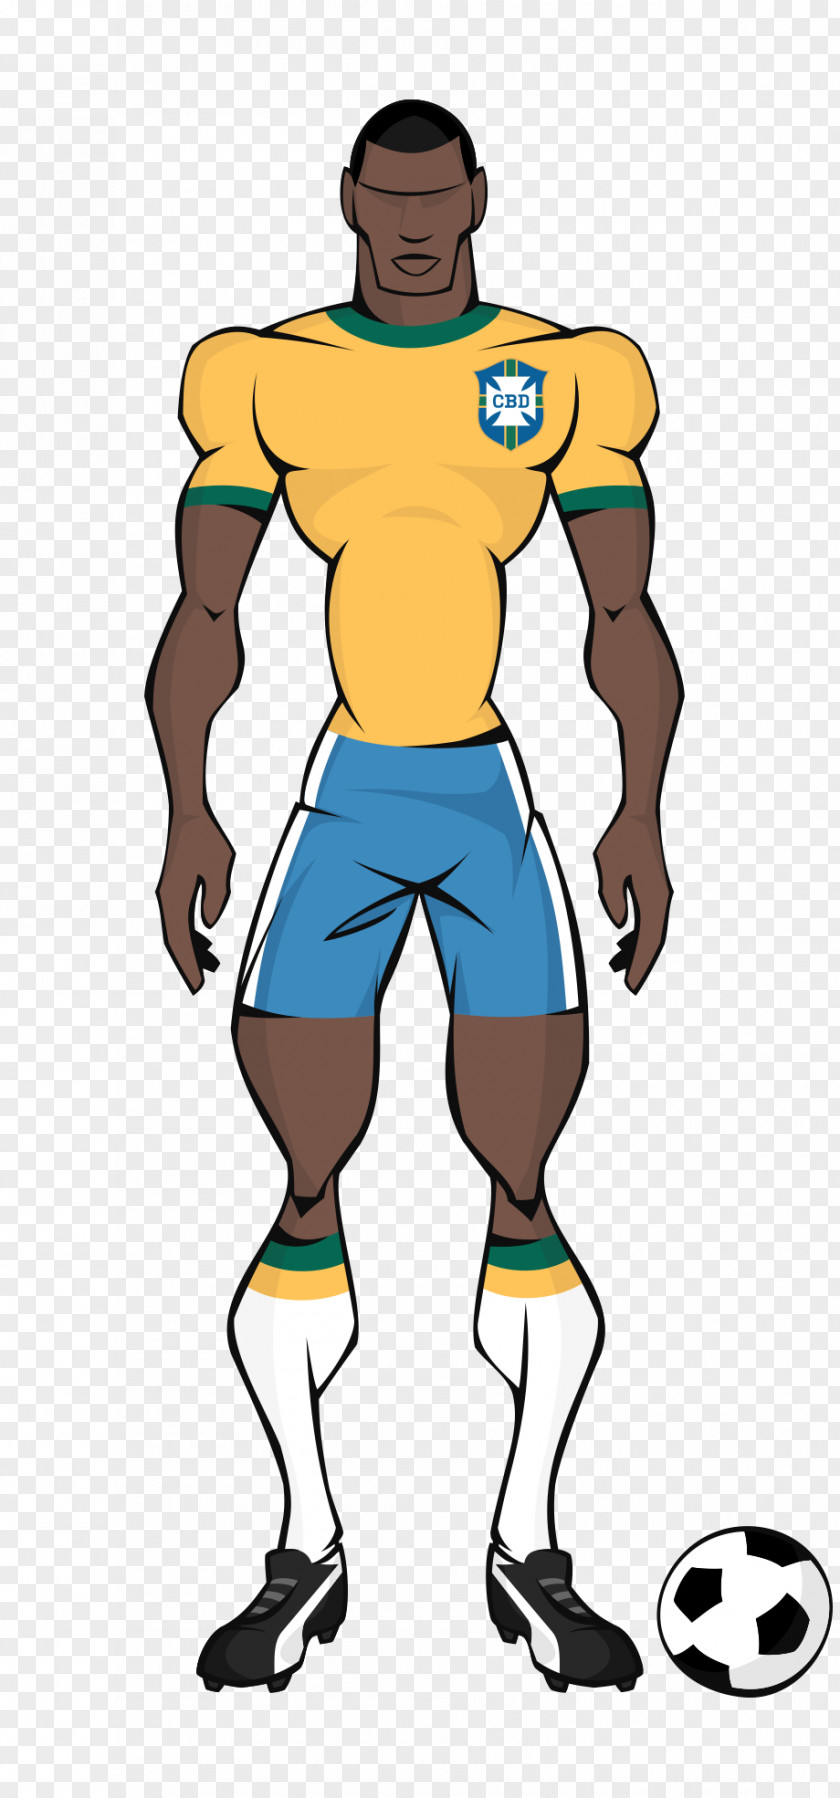 Ita Bulgaria Senegal National Football Team 2002 FIFA World Cup Pelé Brazil Player PNG